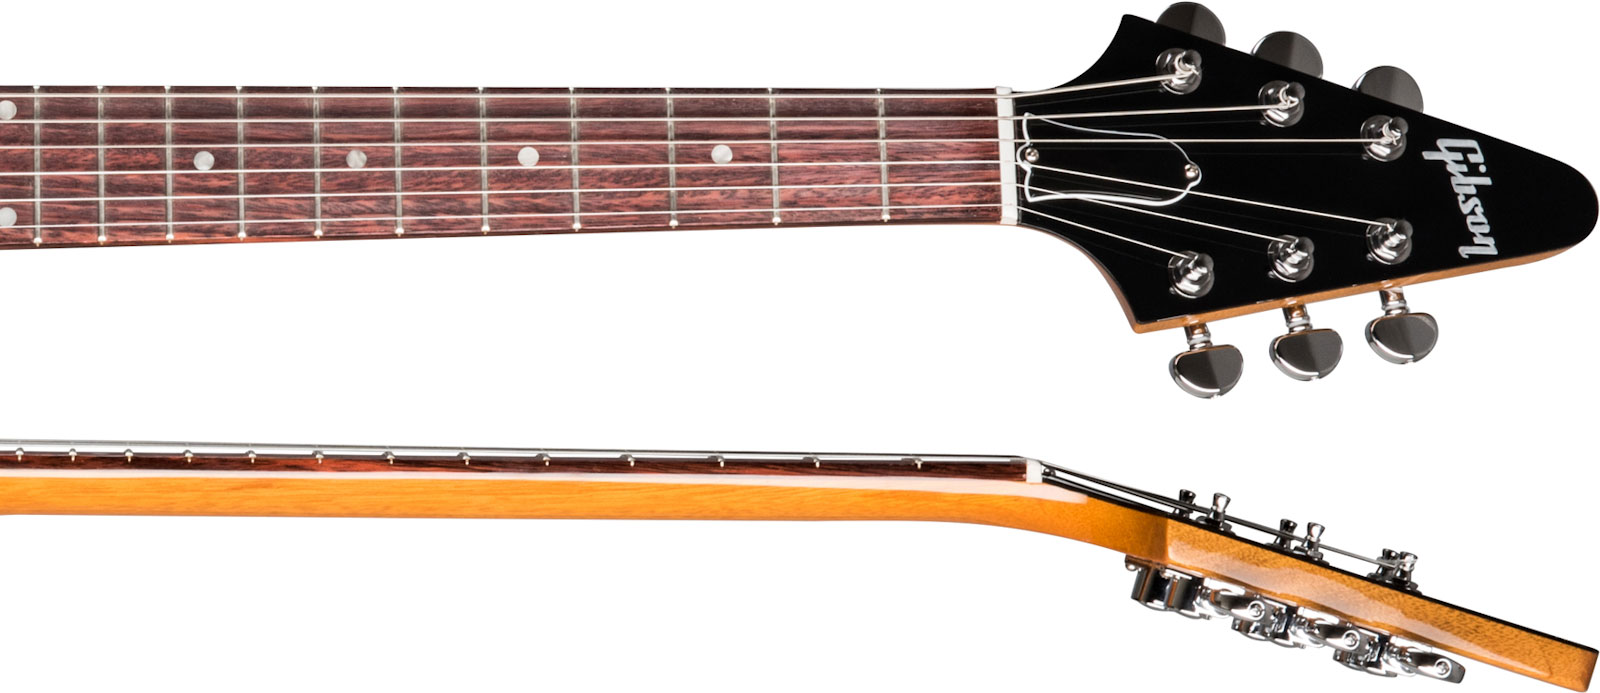 Gibson Flying V Original 2h Ht Rw - Antique Natural - Retro rock electric guitar - Variation 3